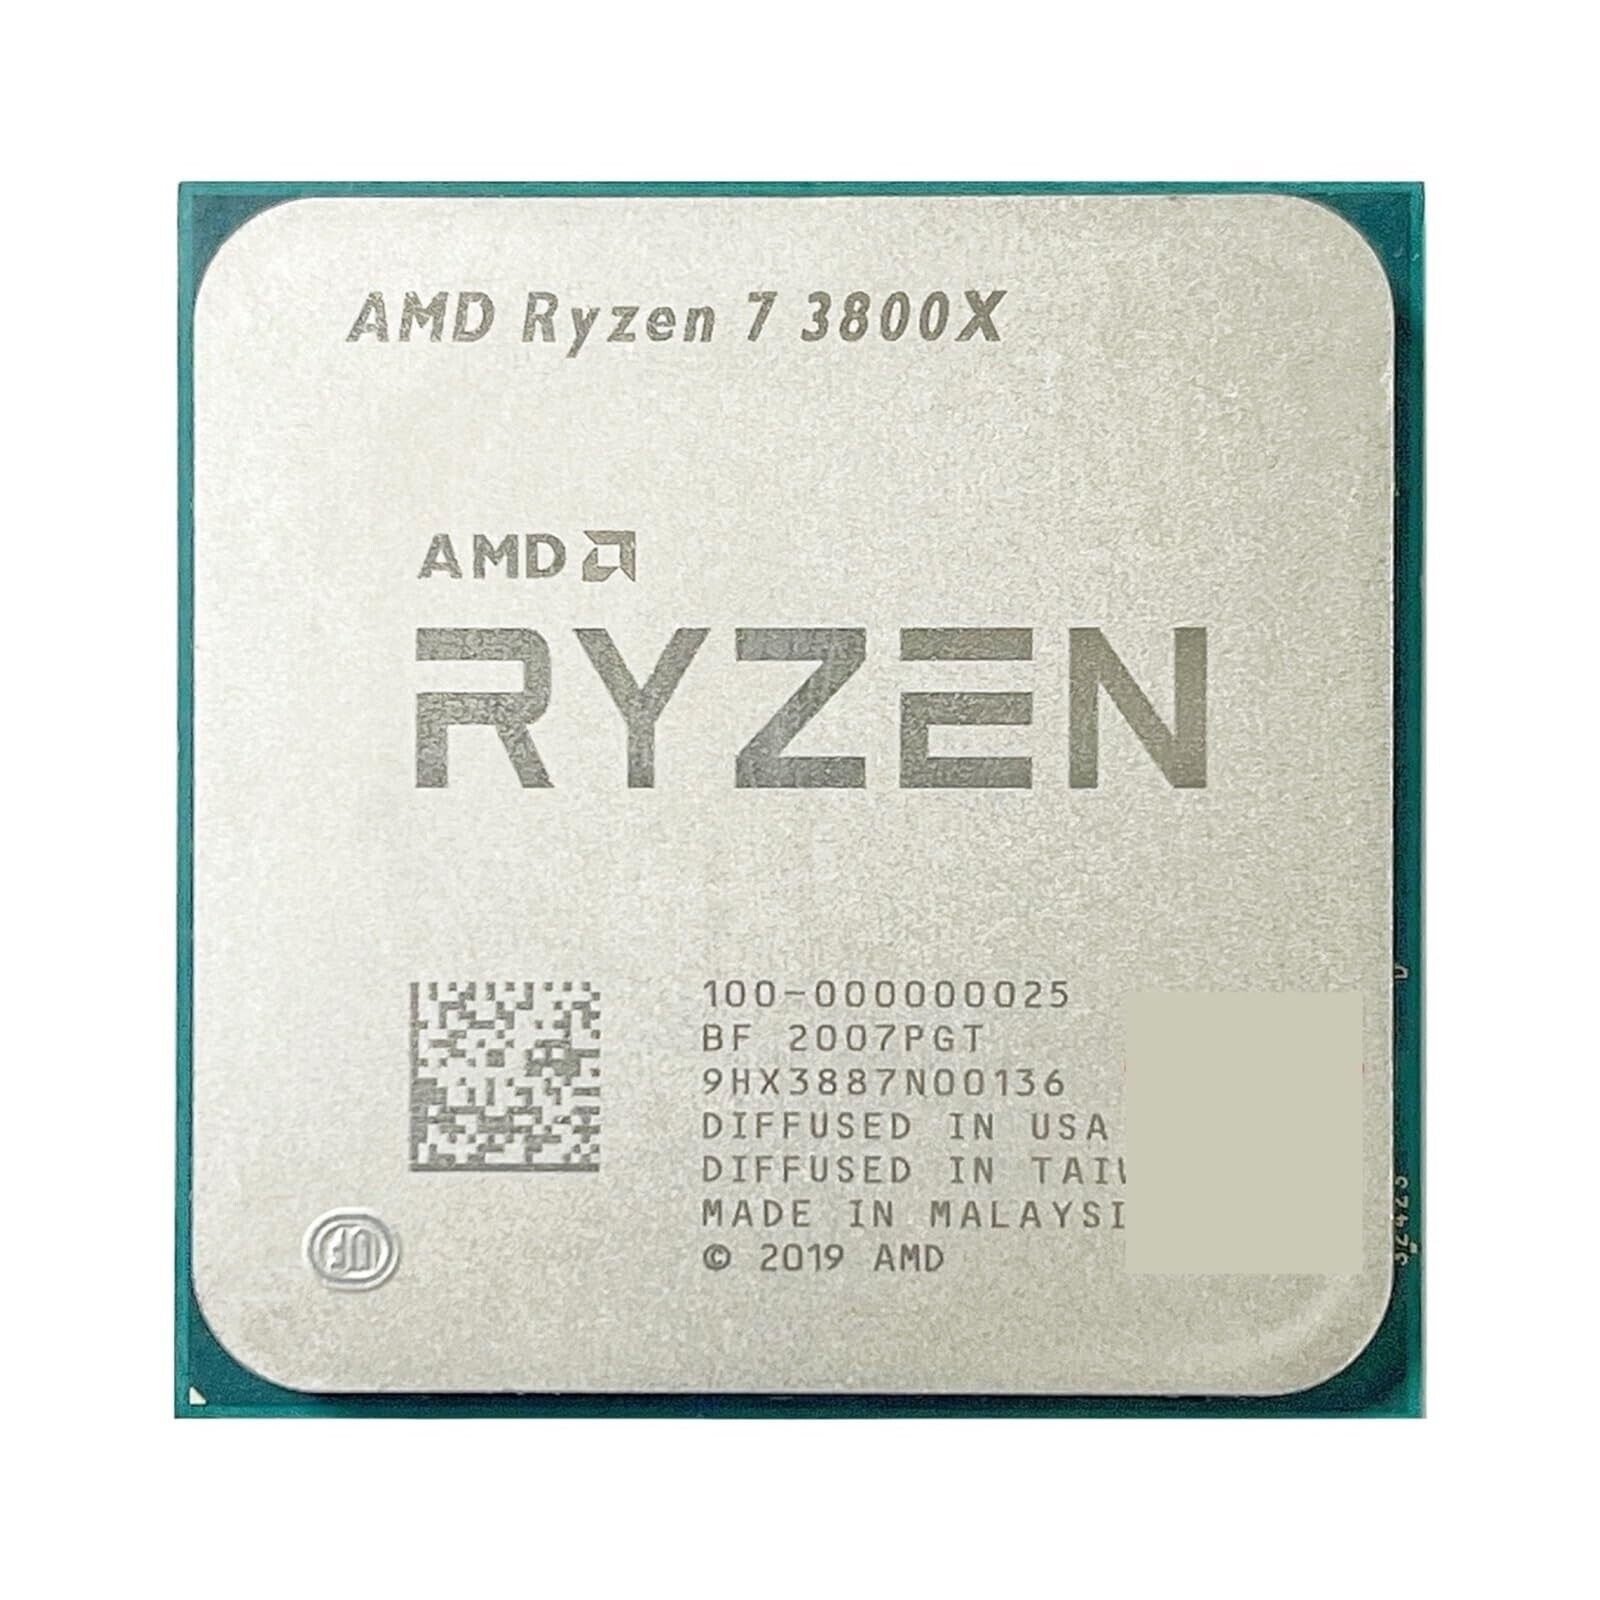 AMD Ryzen 7 3800X Processor  3.9GHz, 8 Cores, Socket AM4